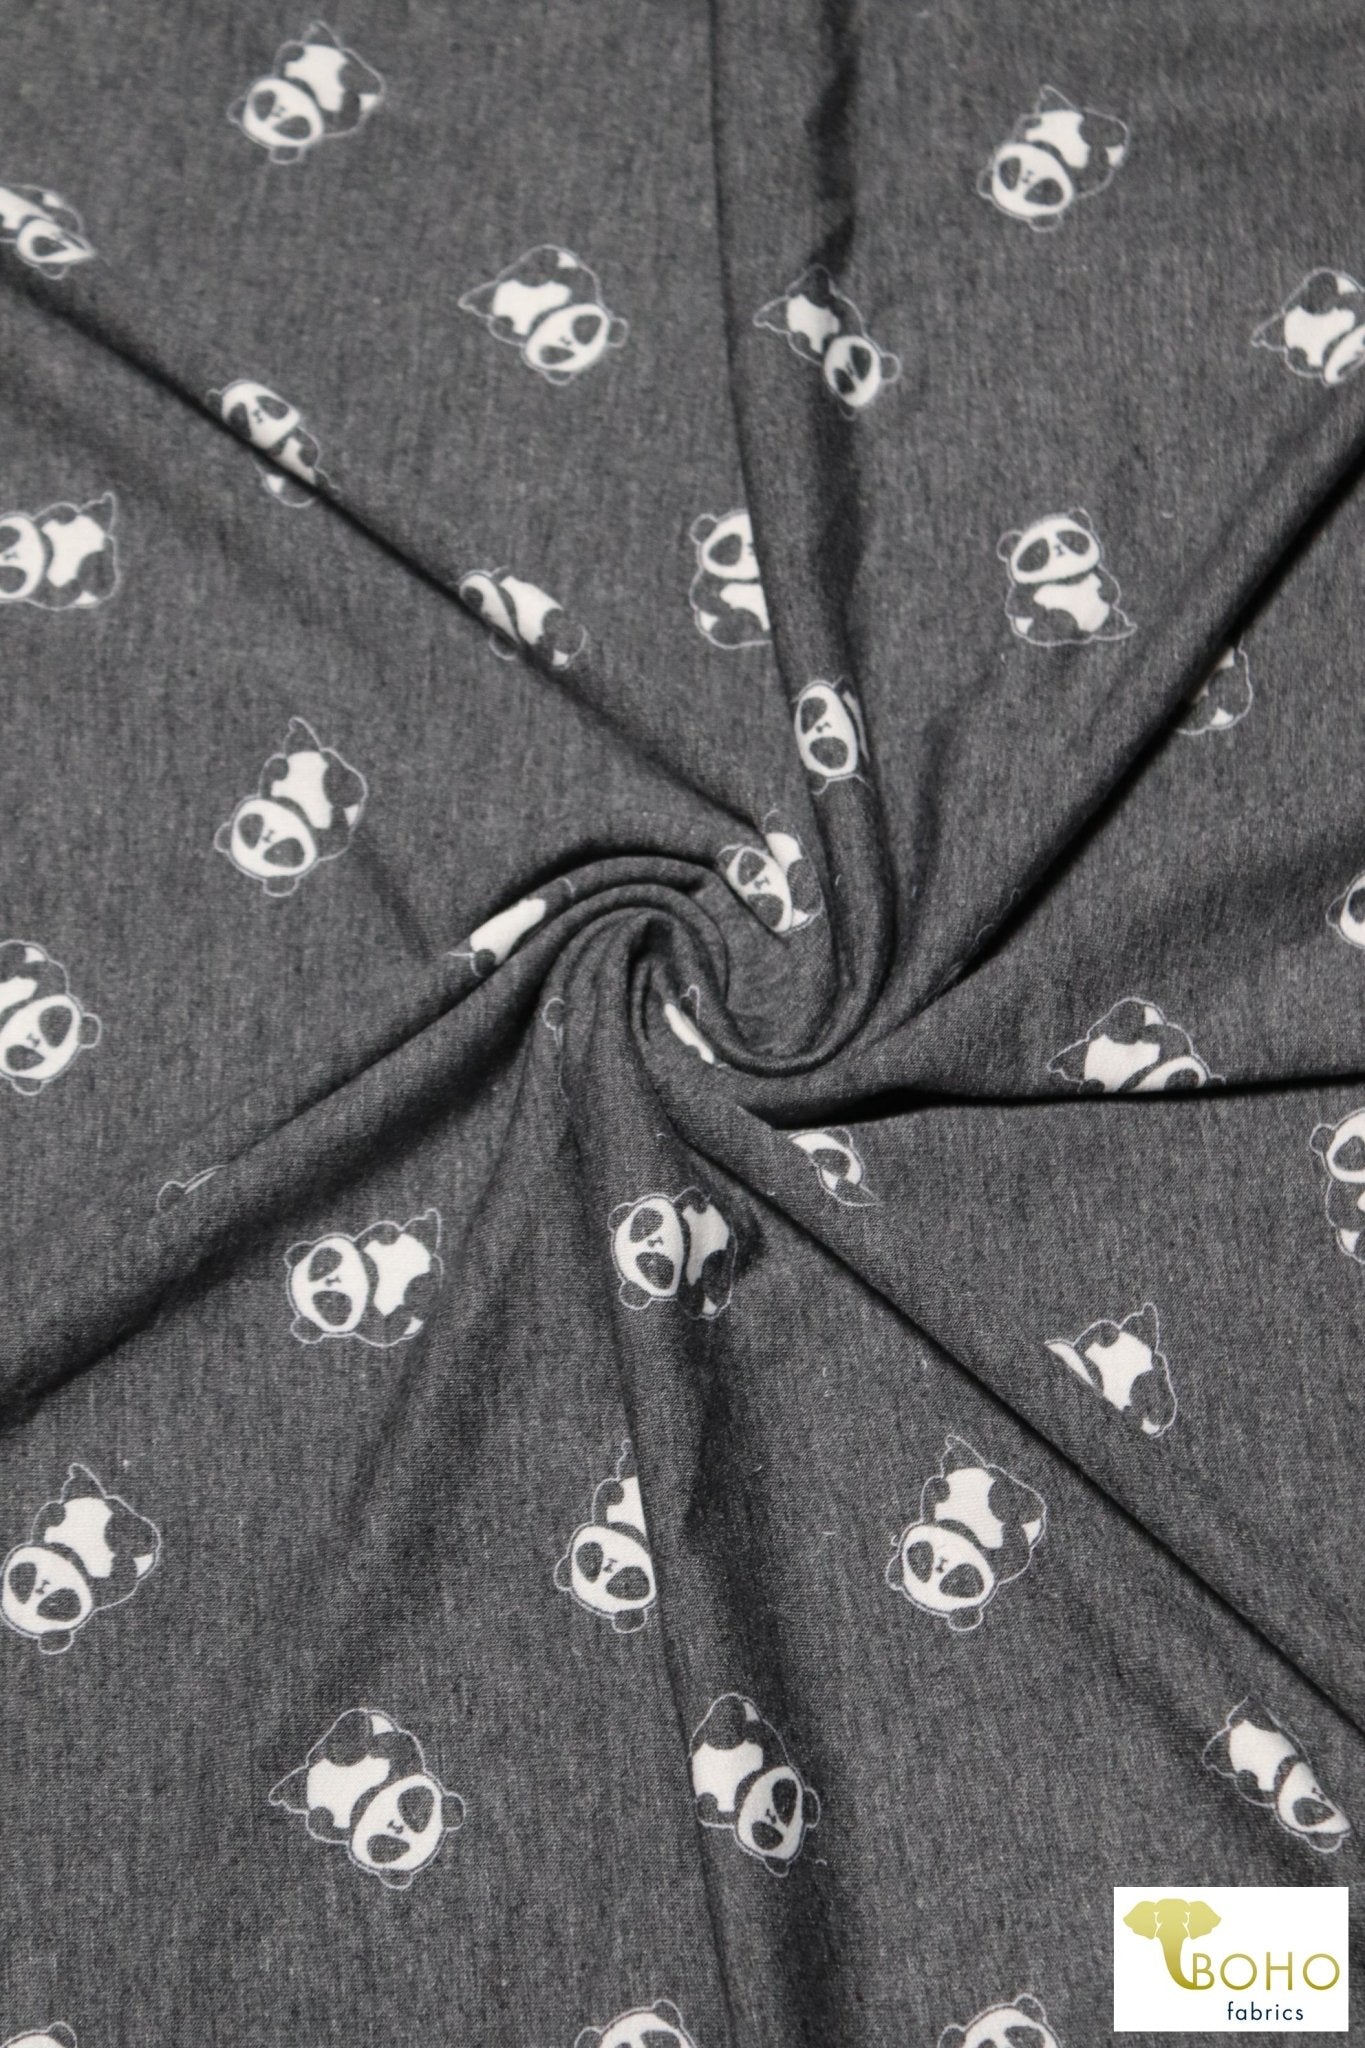 Pandas on Black, French Terry Knit Print. FTP-321-BLK - Boho Fabrics